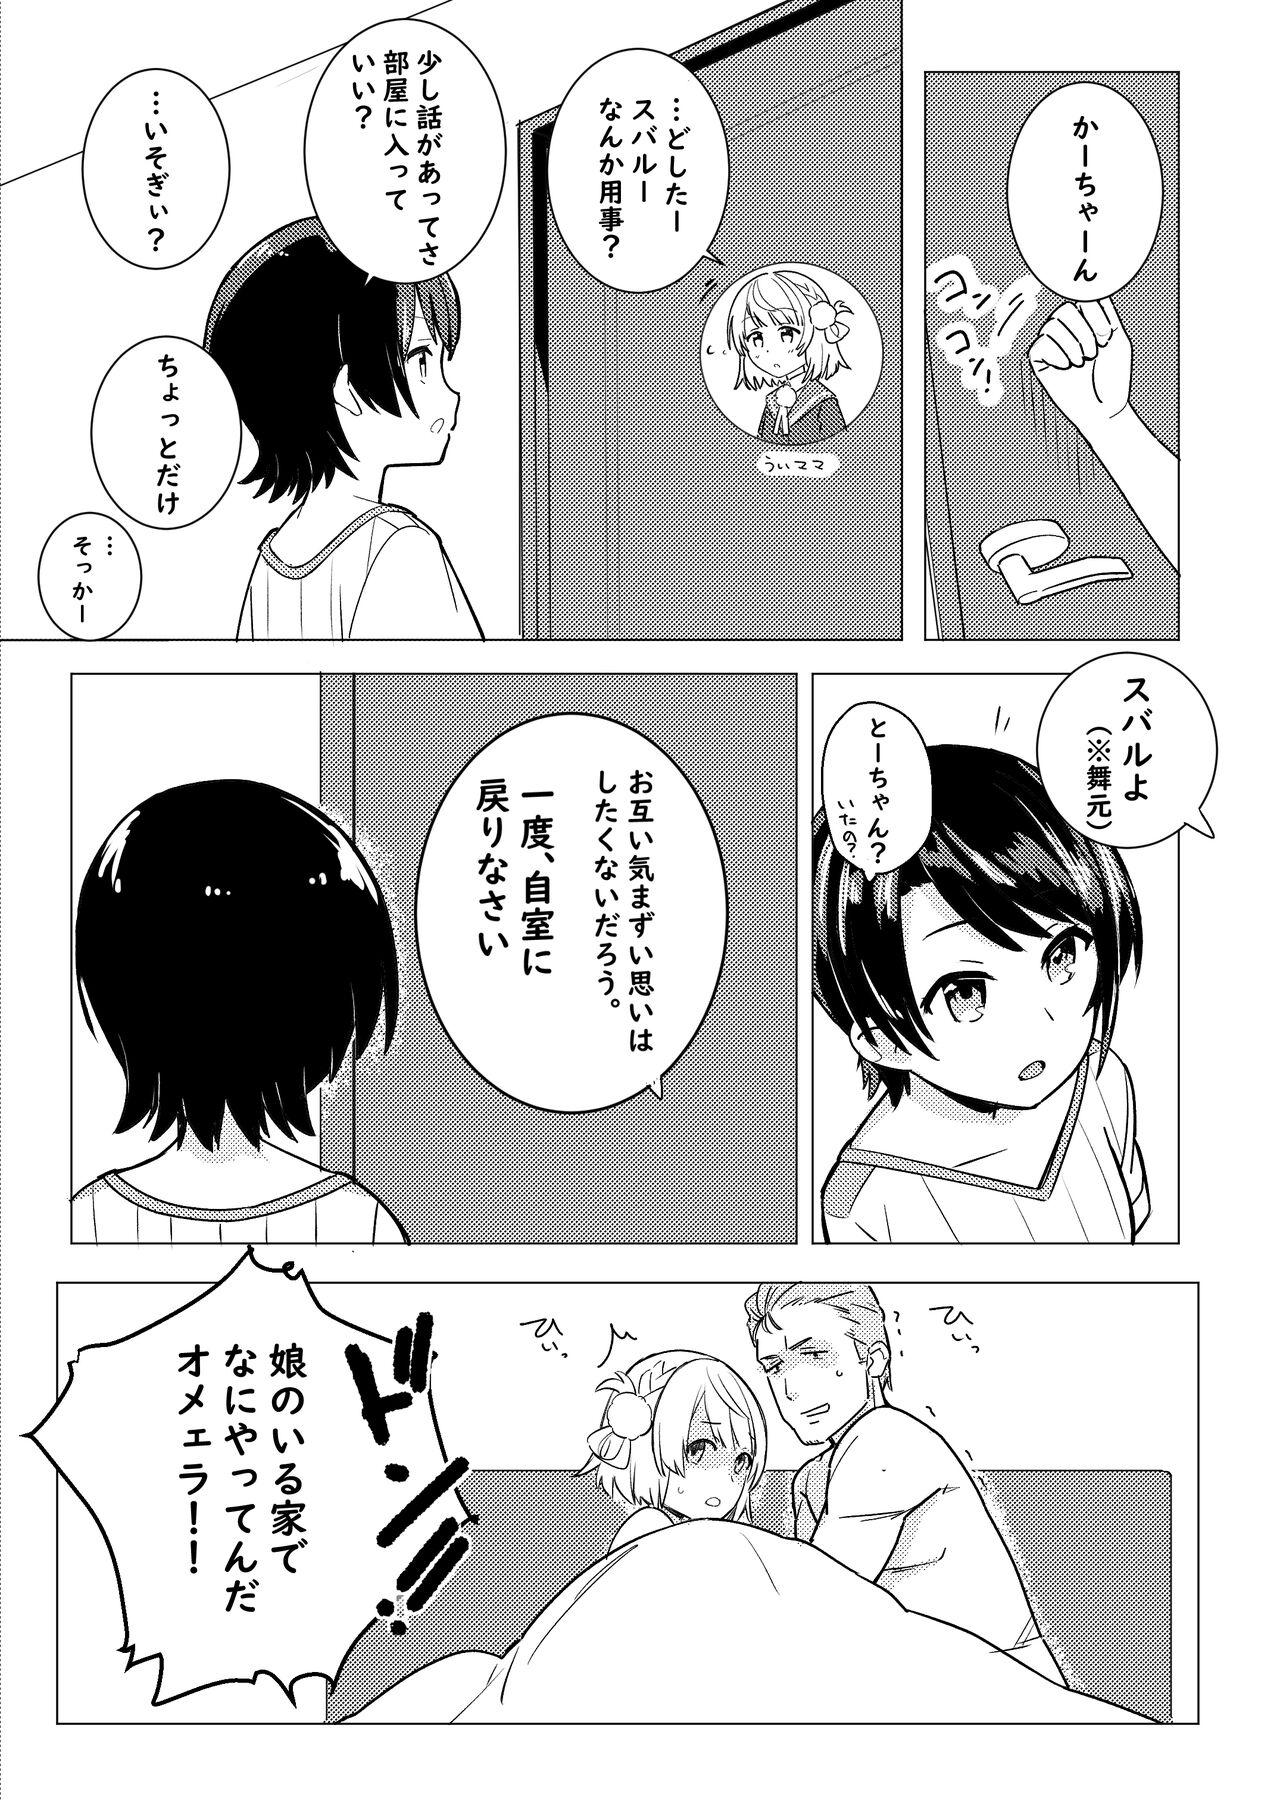 Lolicon Twitter Short Manga - Hololive Male - Page 5